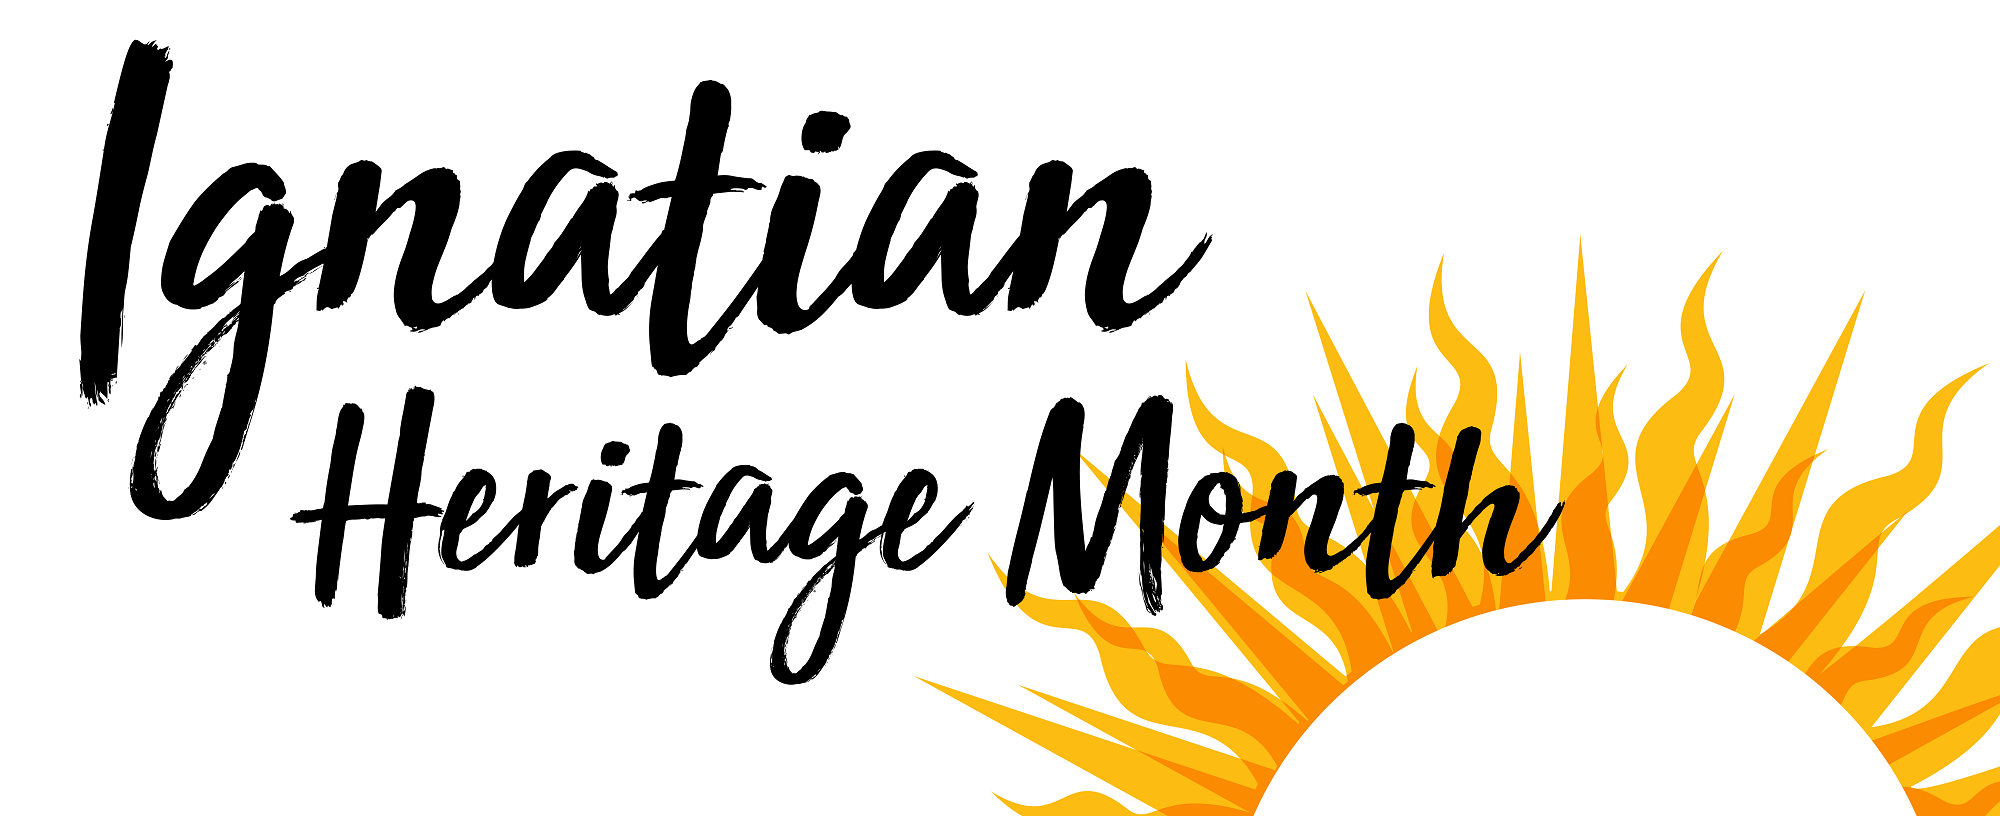 Ignatian Heritage Month Hero Image